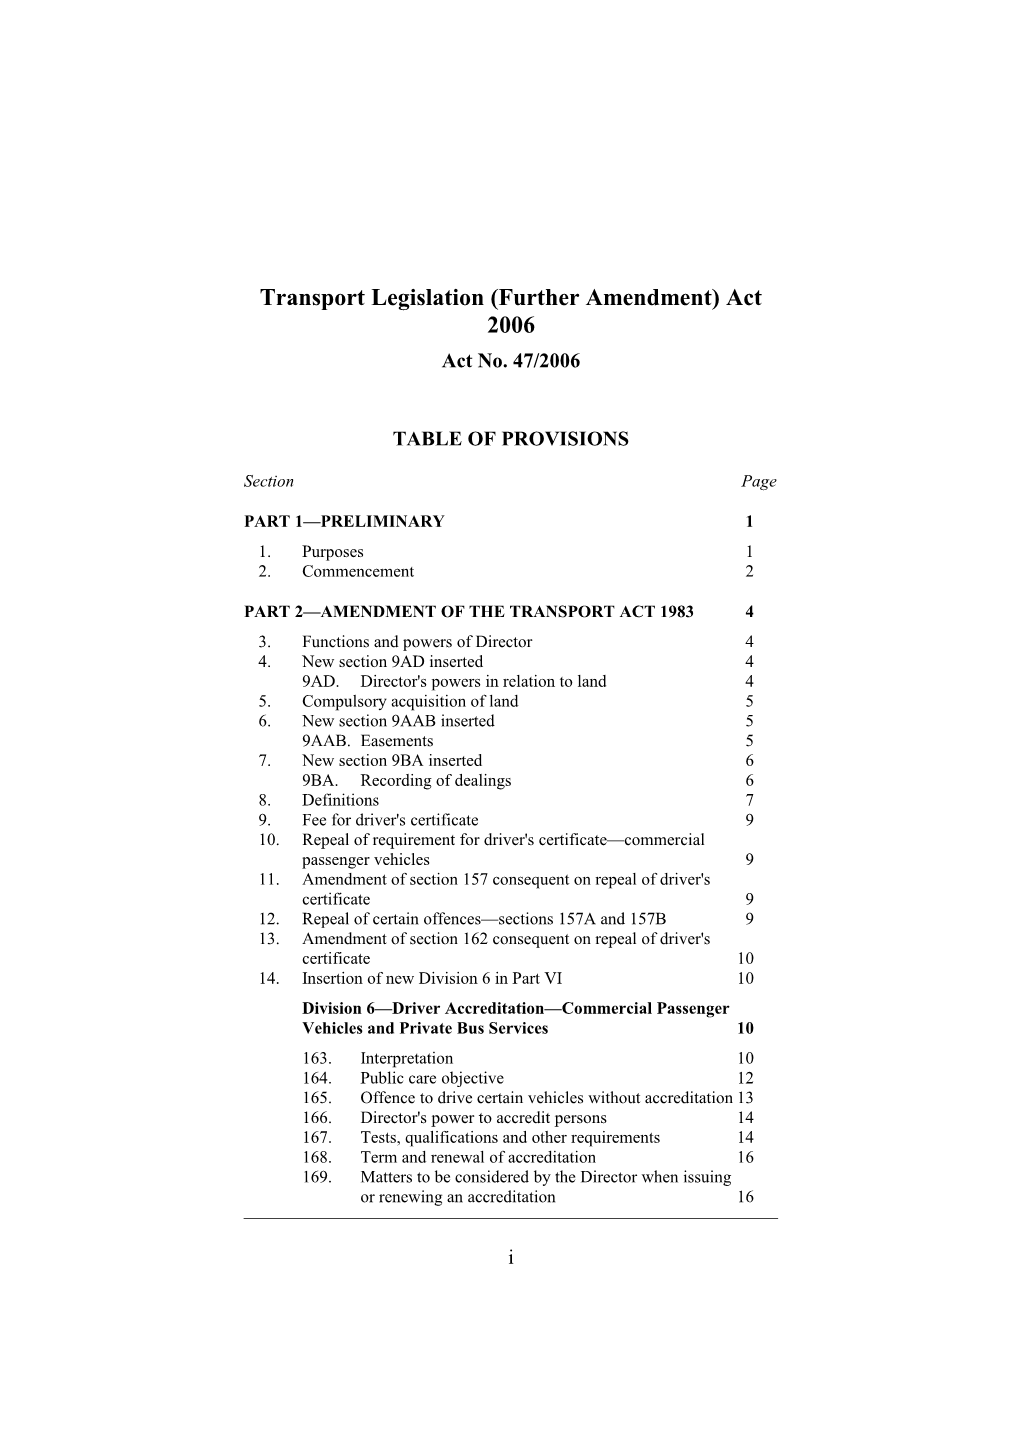 Transport Legislation (Further Amendment) Act 2006